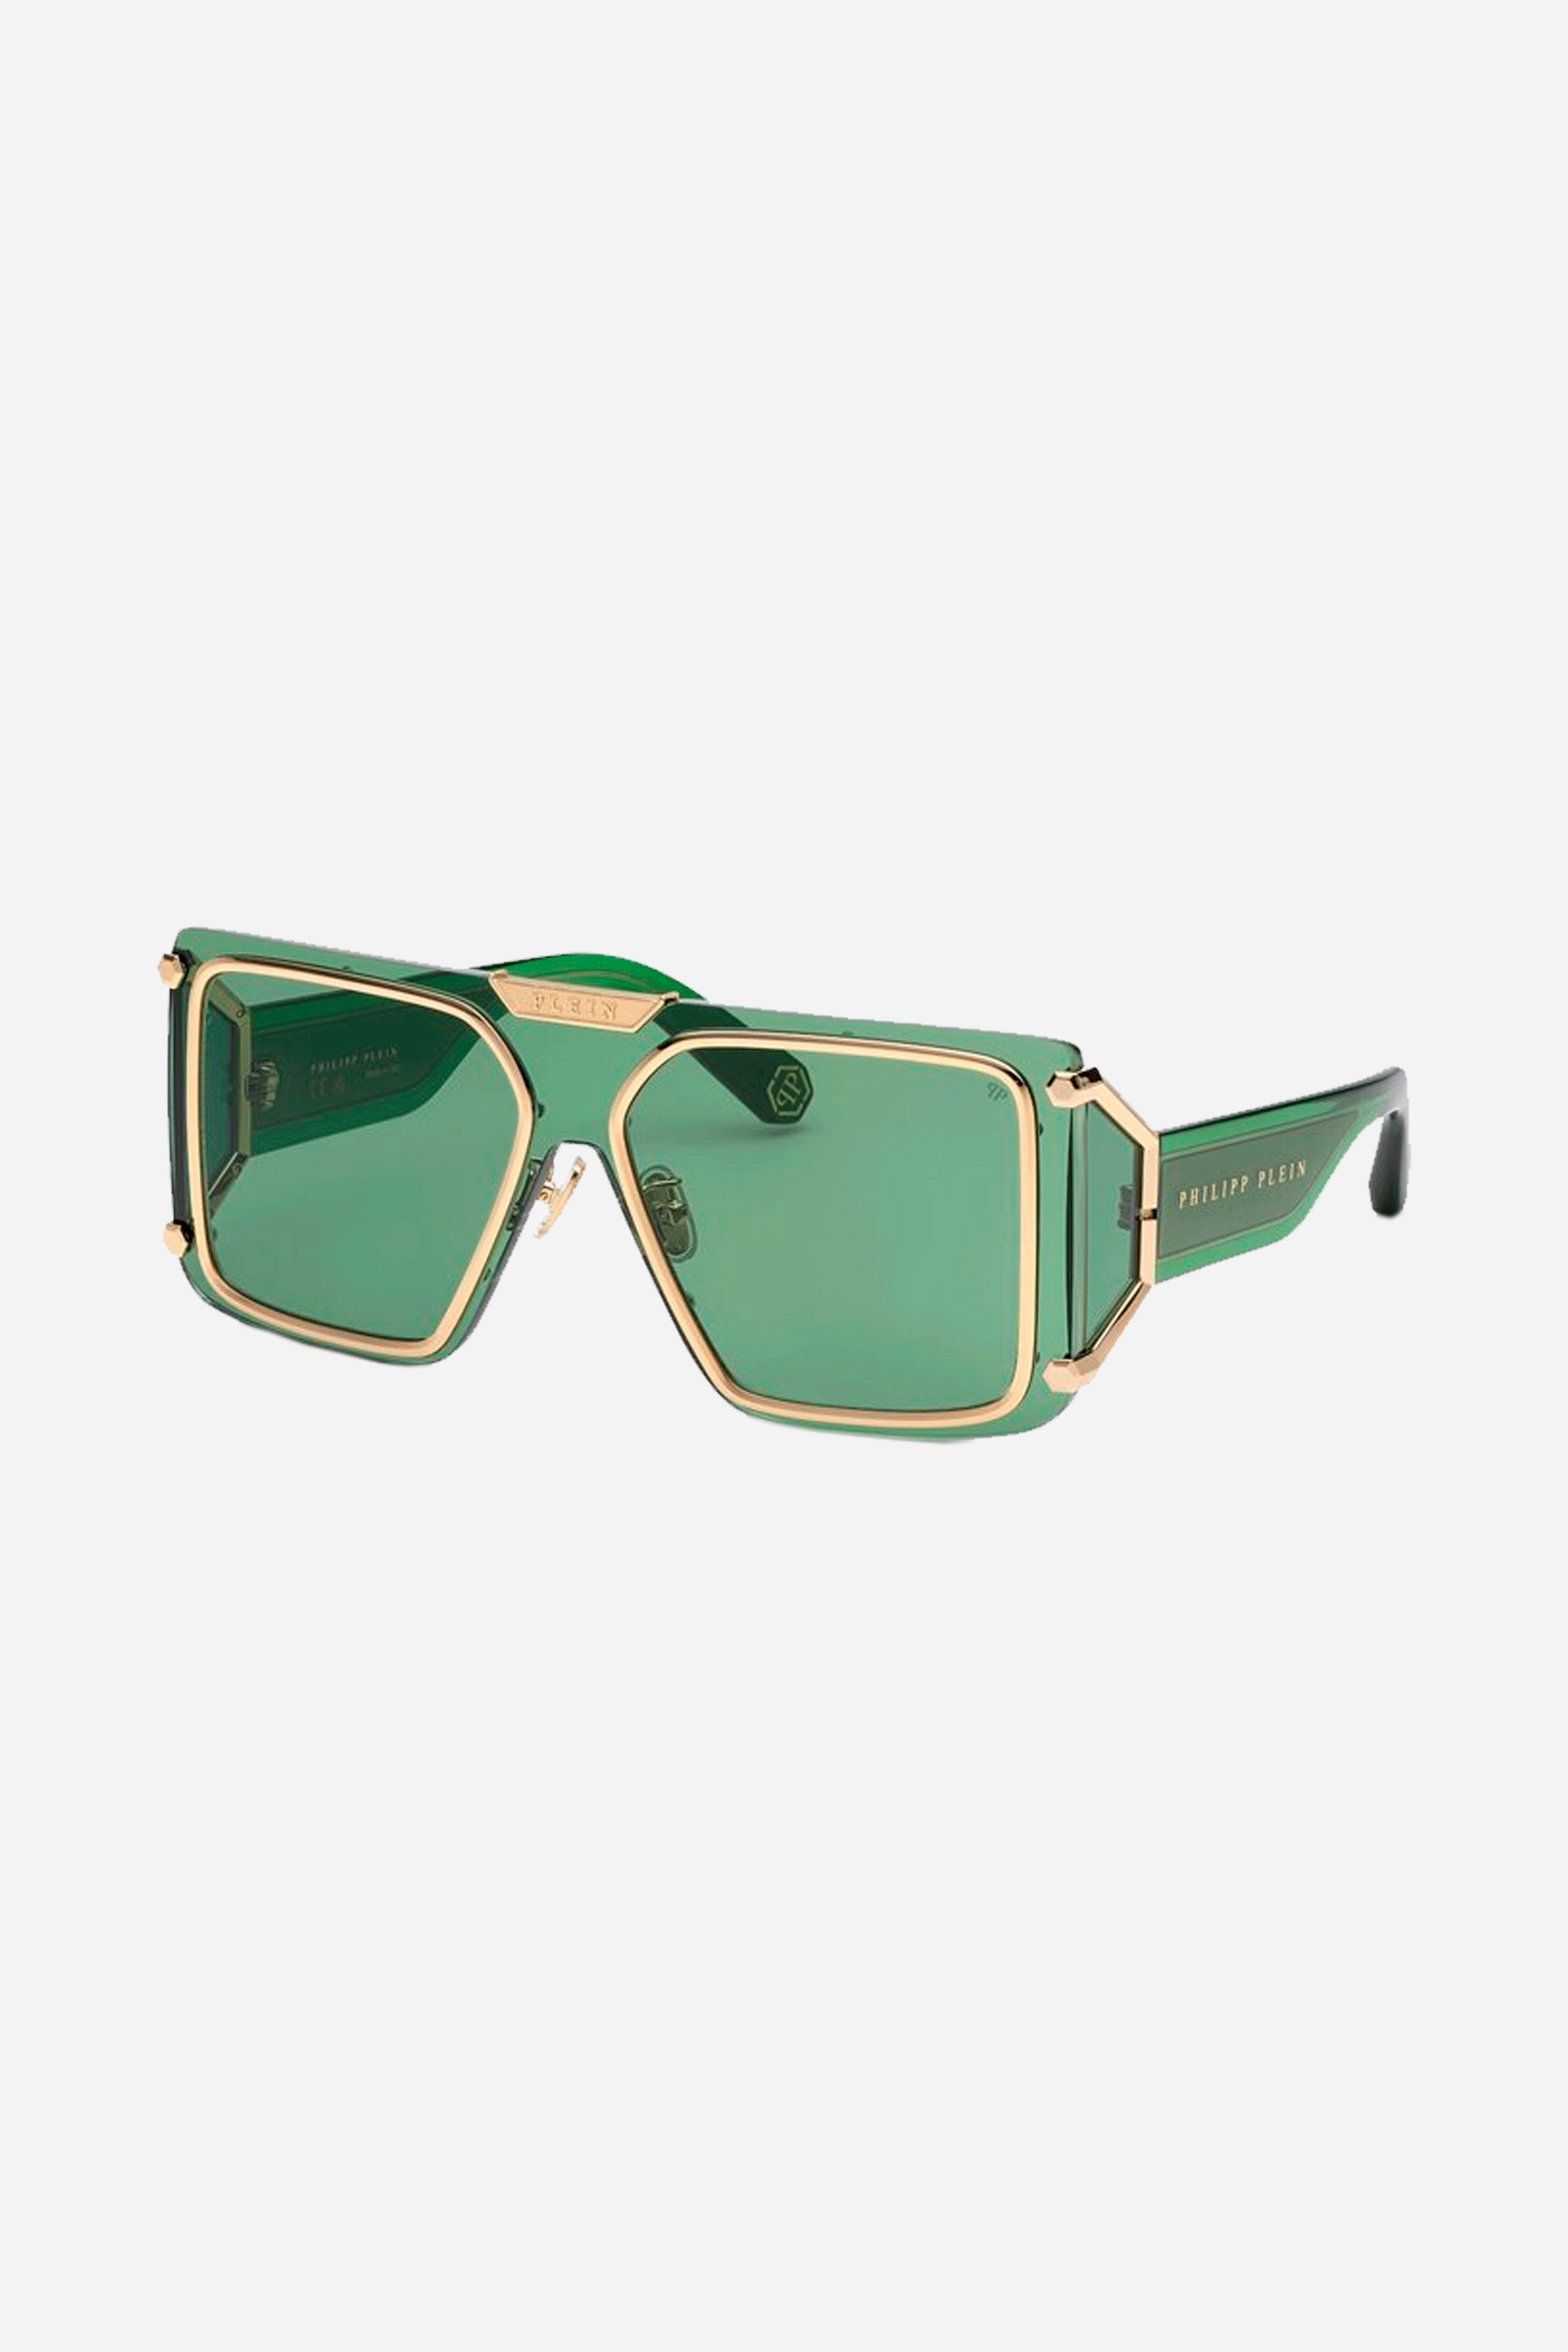 Philipp Plein green mask sunglasses - Eyewear Club